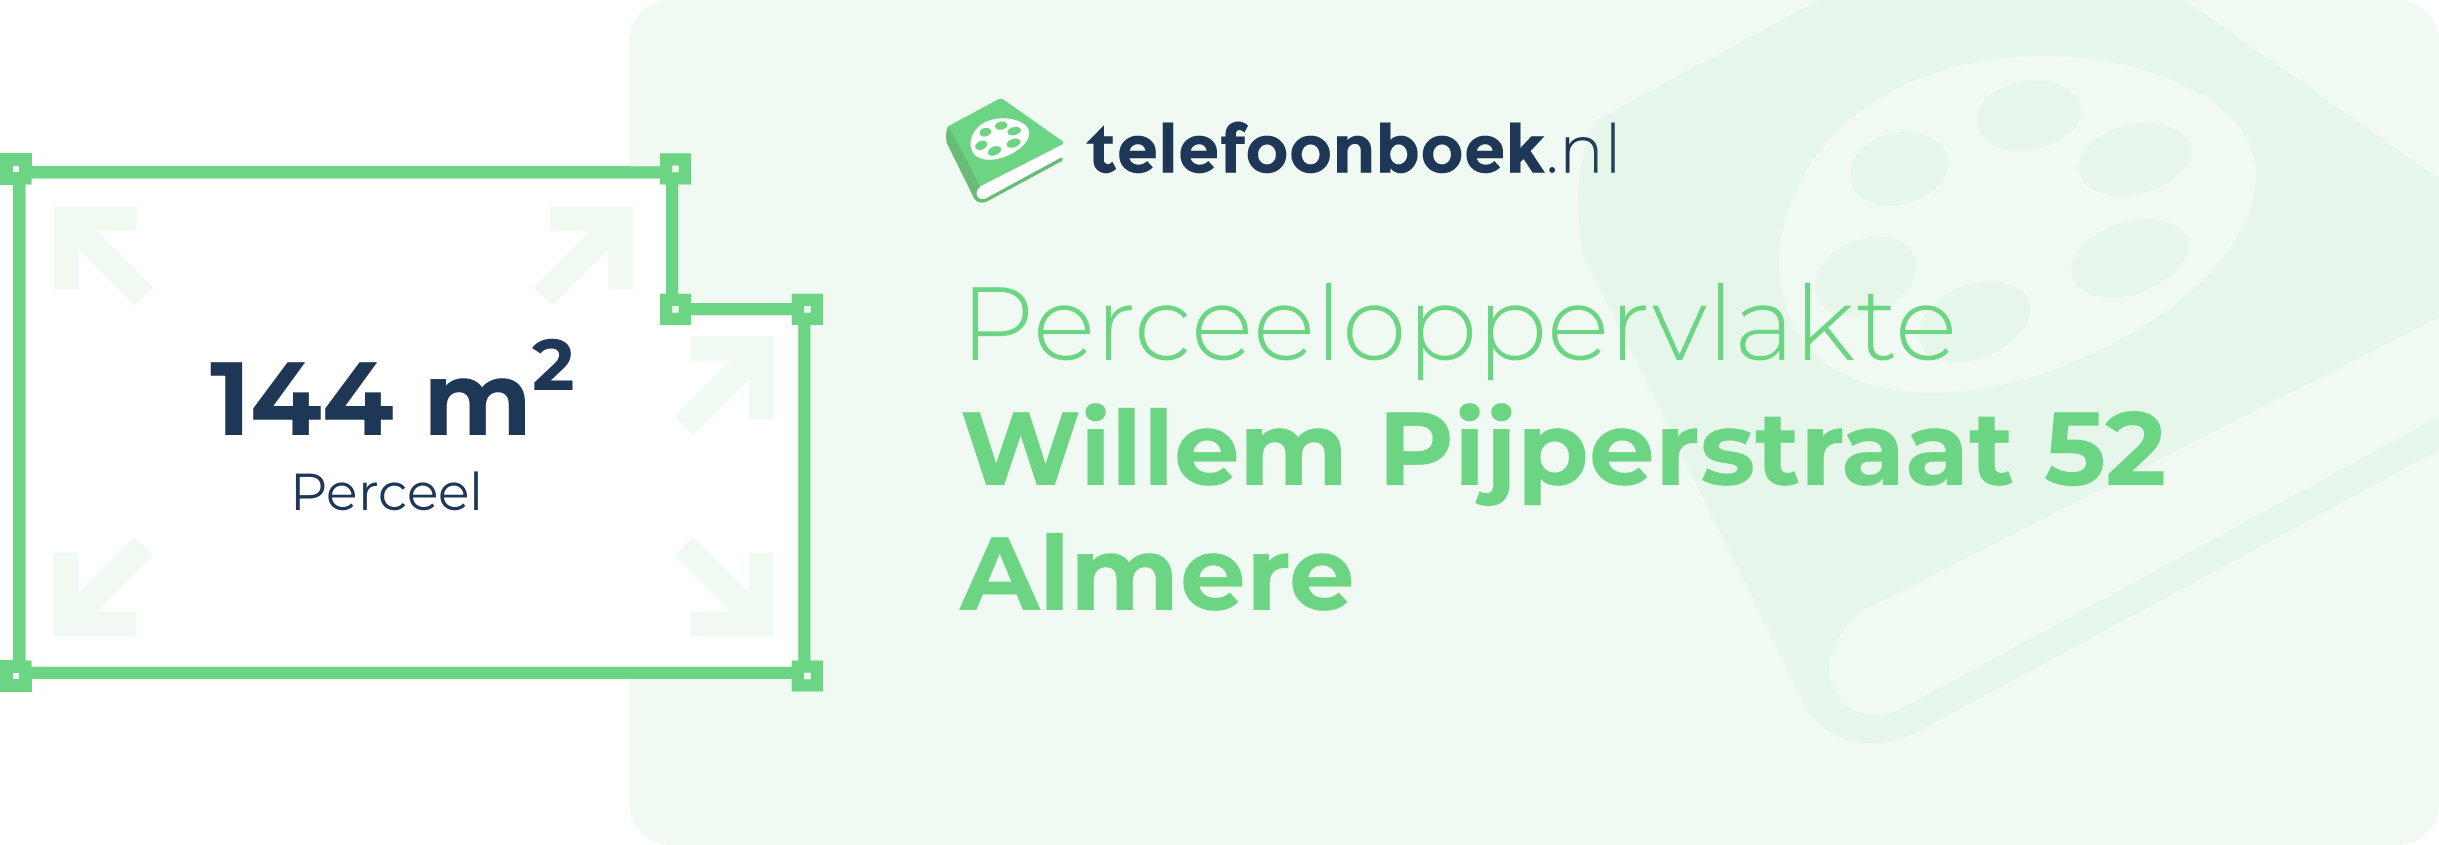 Perceeloppervlakte Willem Pijperstraat 52 Almere